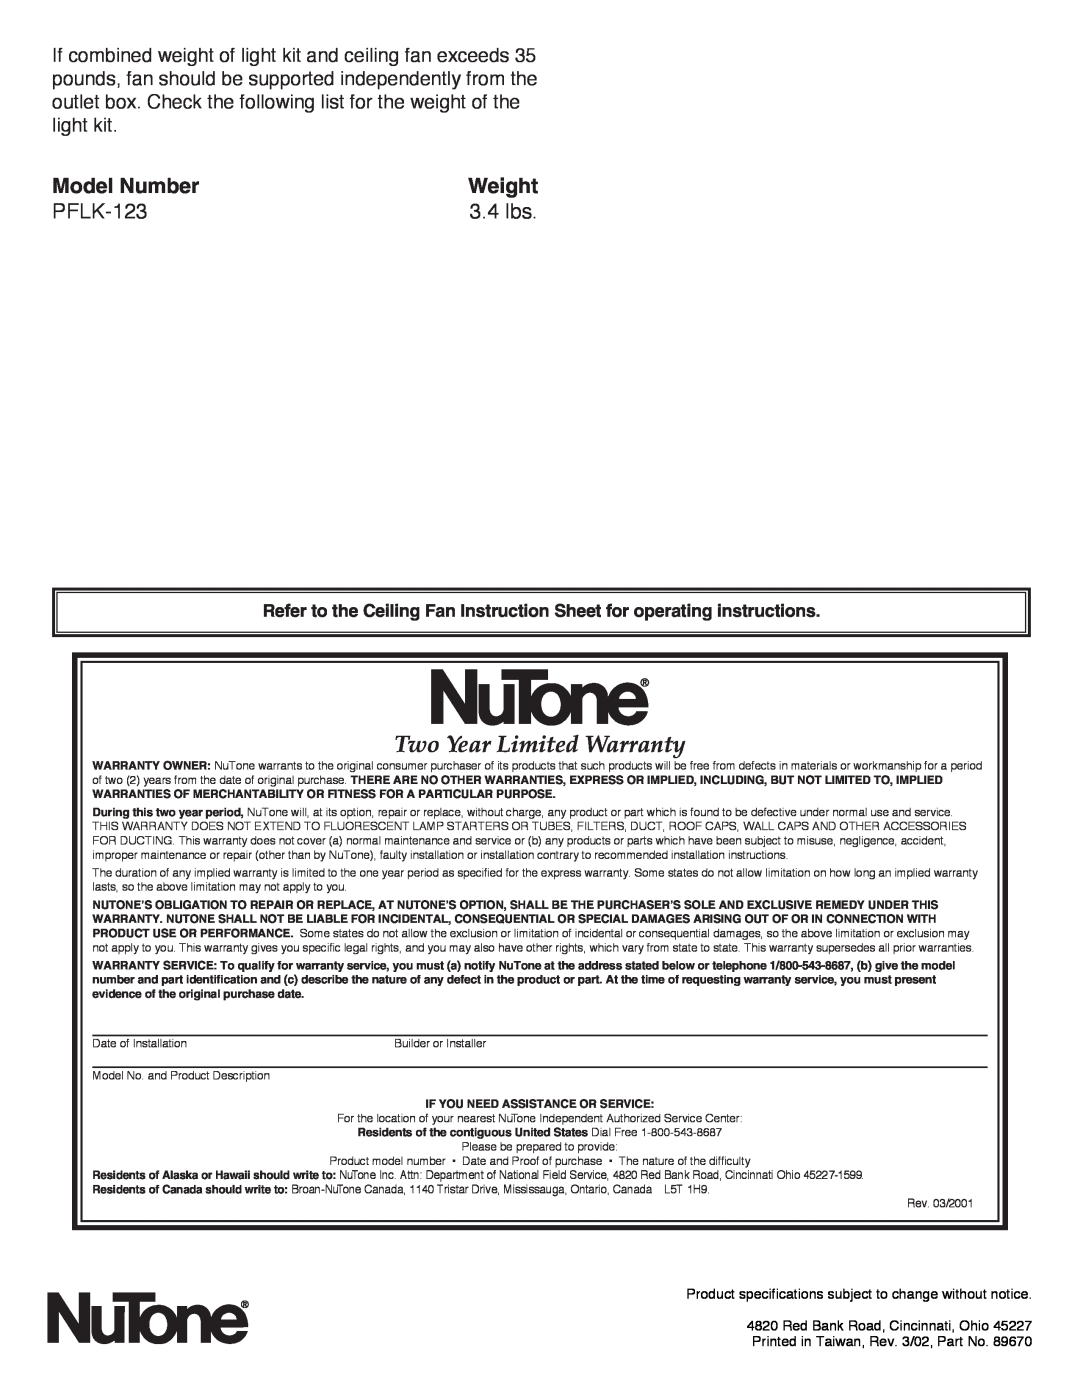 NuTone PFLK-123 Two Year Limited Warranty, Model Number, Weight, 3.4 lbs, Red Bank Road, Cincinnati, Ohio 